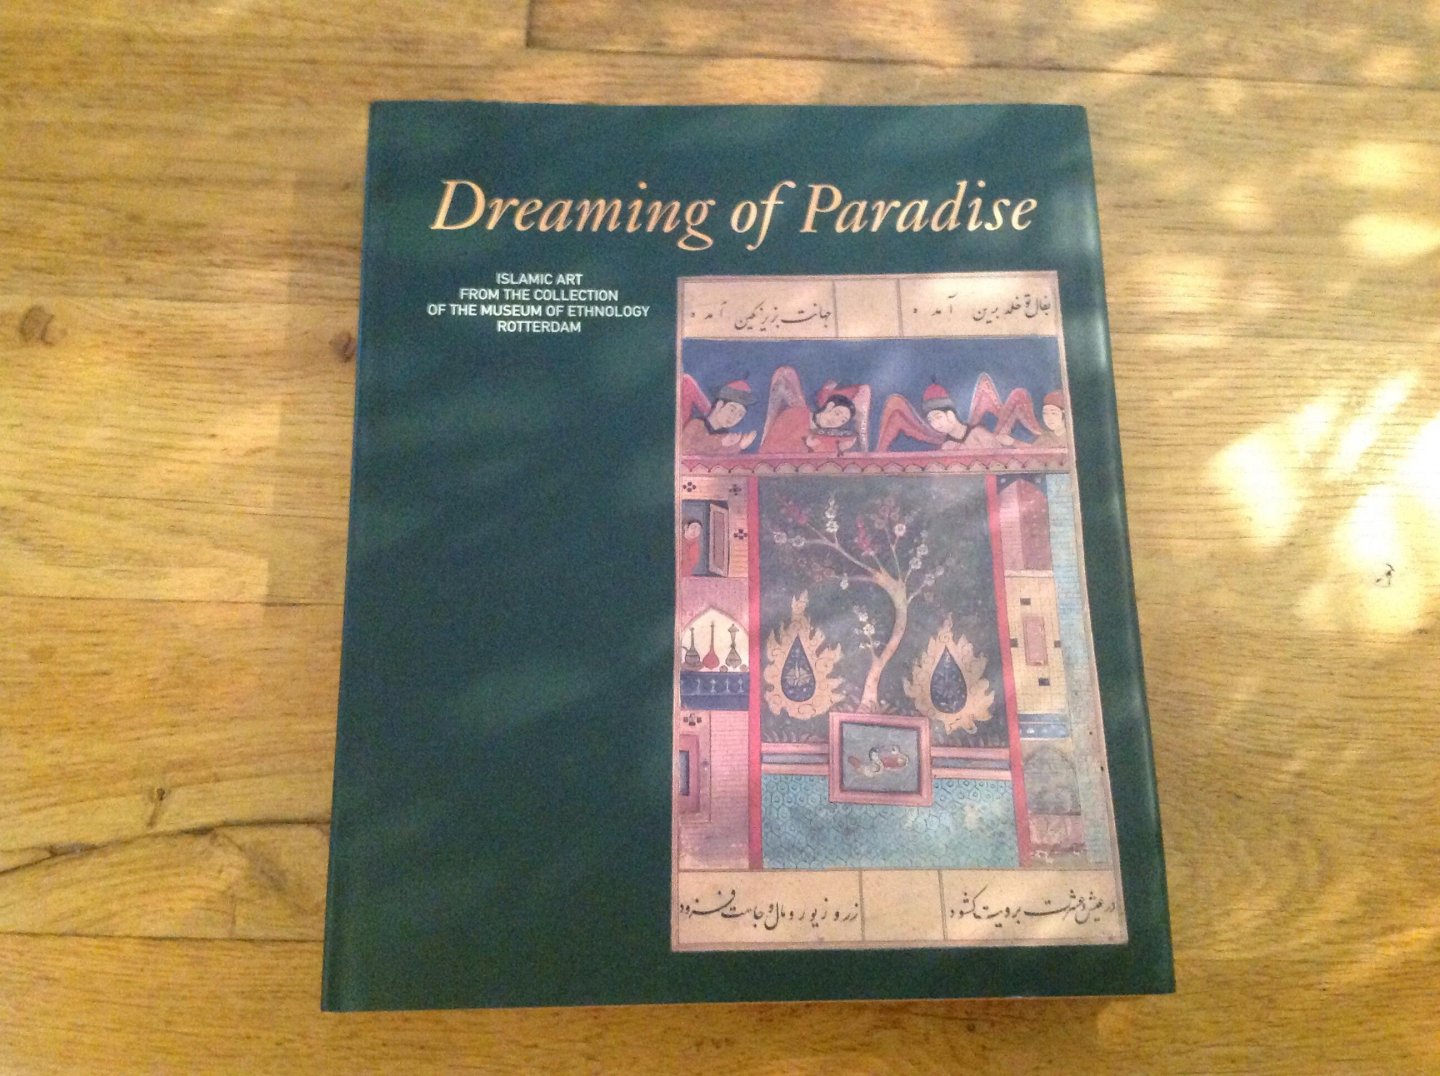  - Dreaming of paradise / druk 1